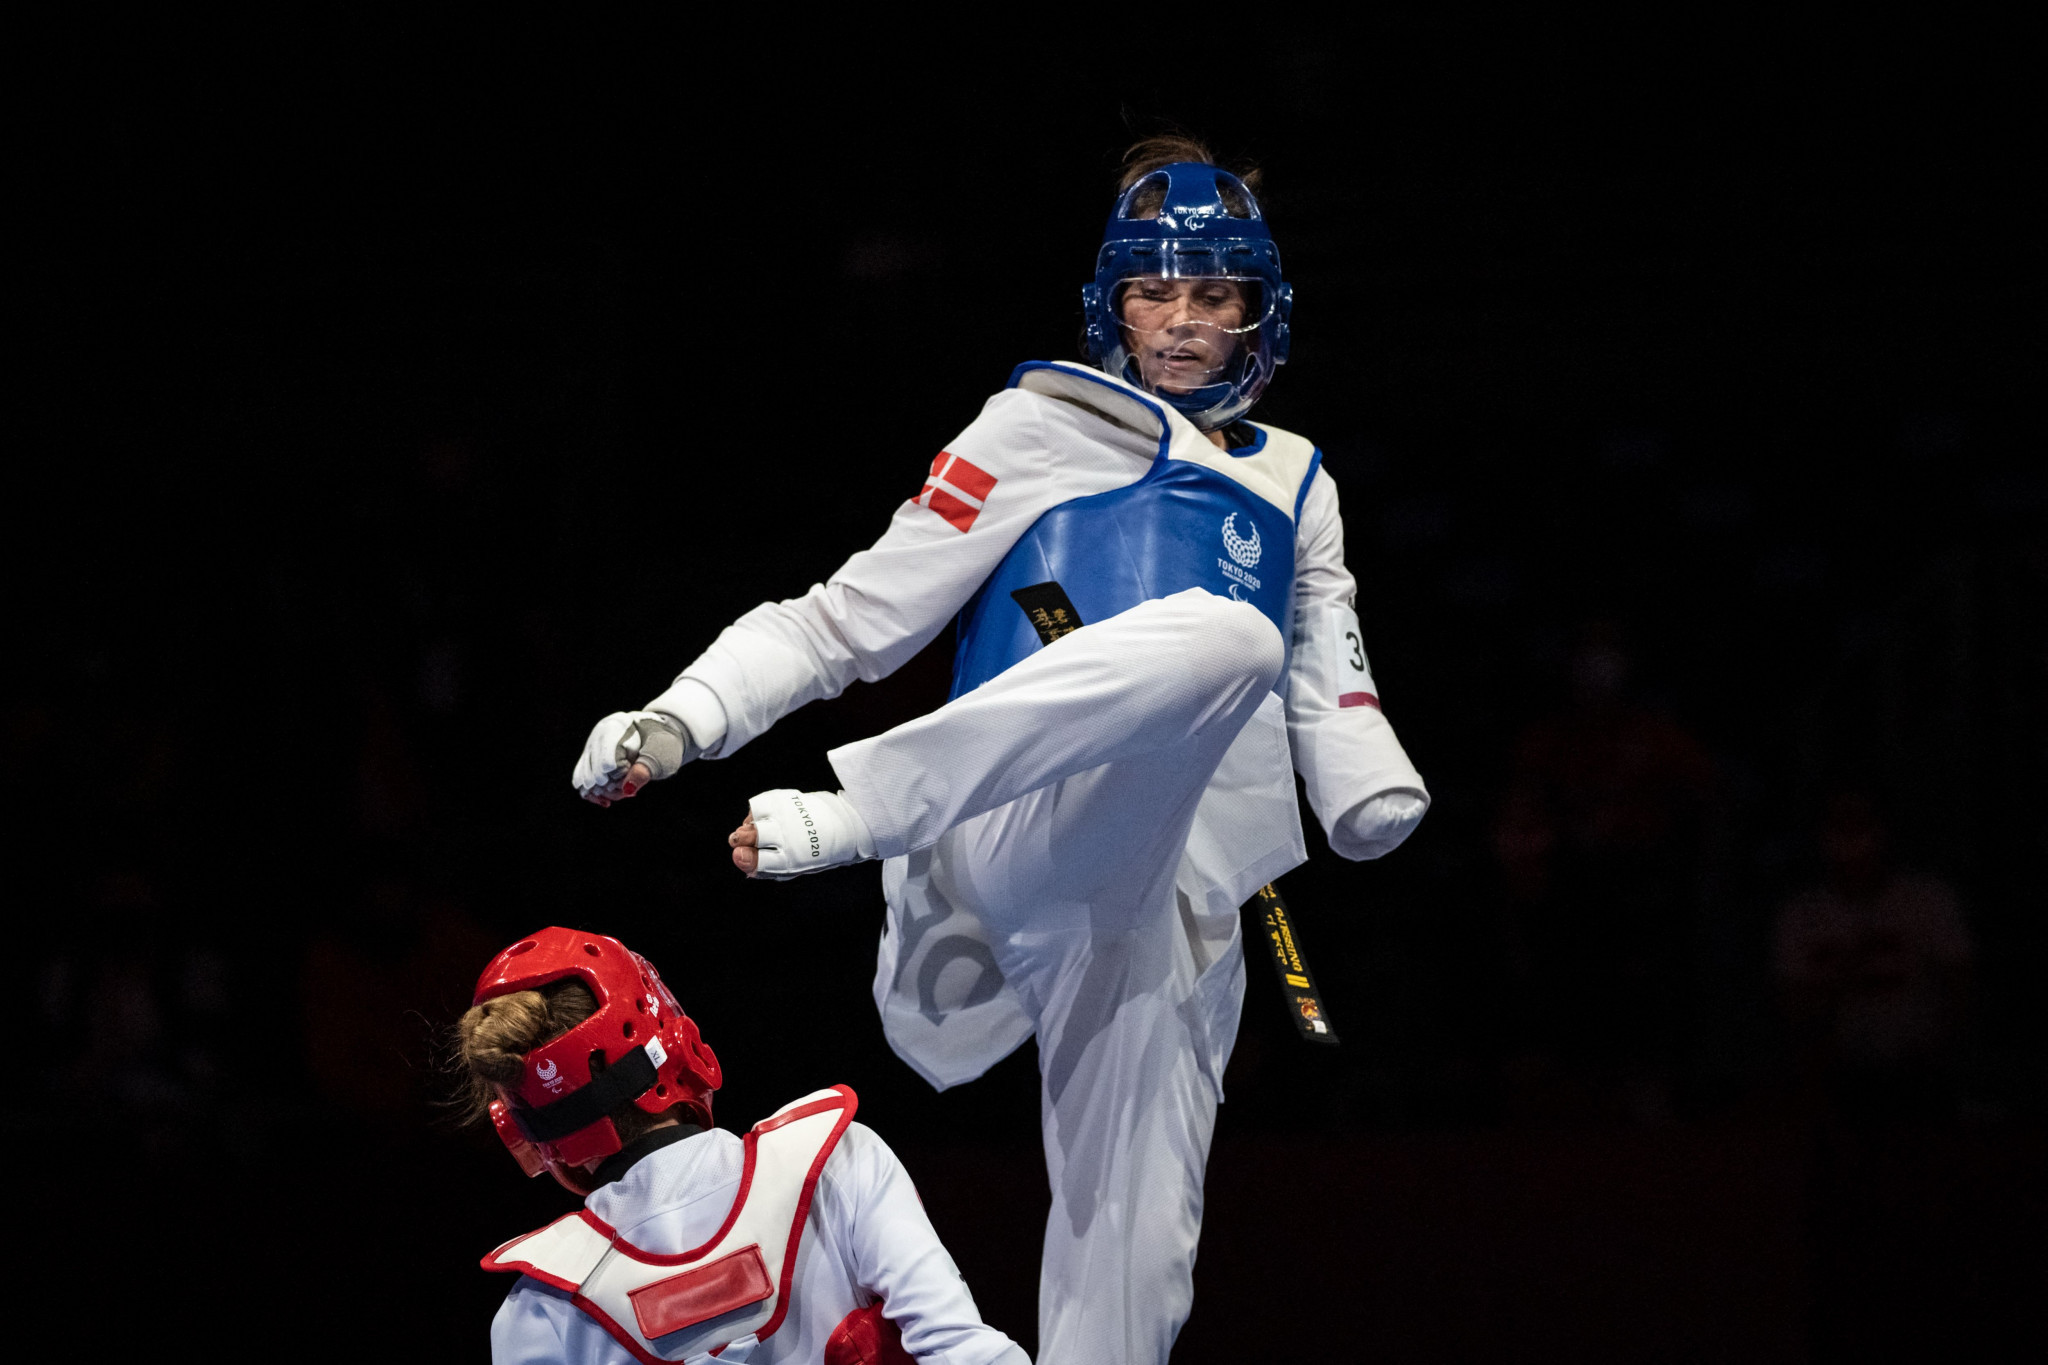 Para taekwondo fighter Gjessing nominated for Danish Sports Name of the Year award